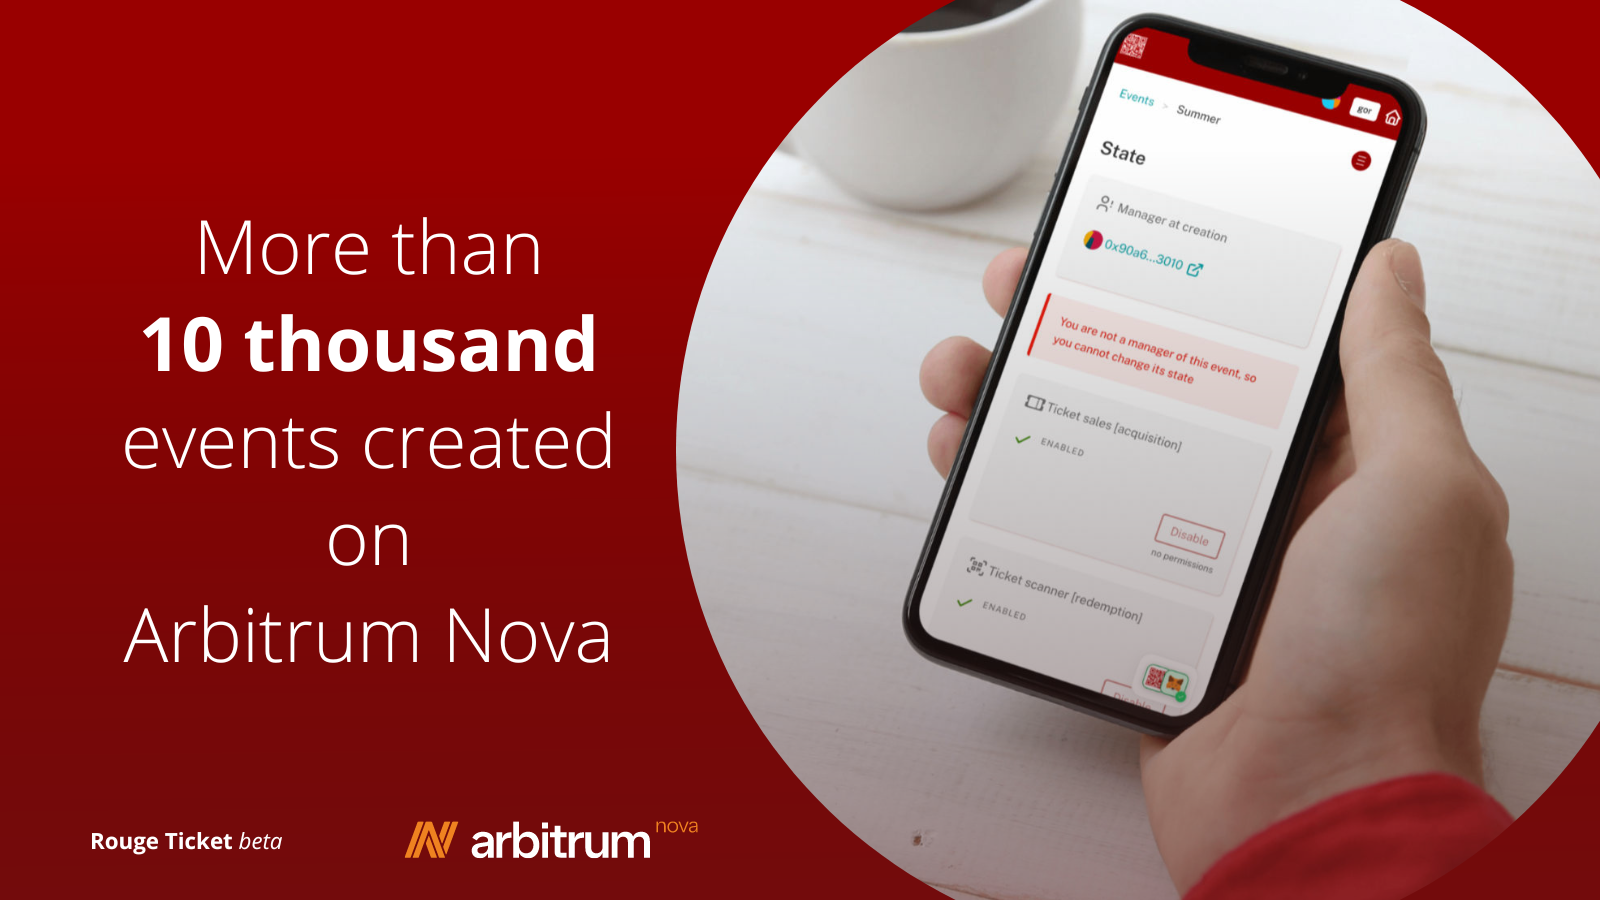 More than 10 thousand events created on Arbitrum Nova!